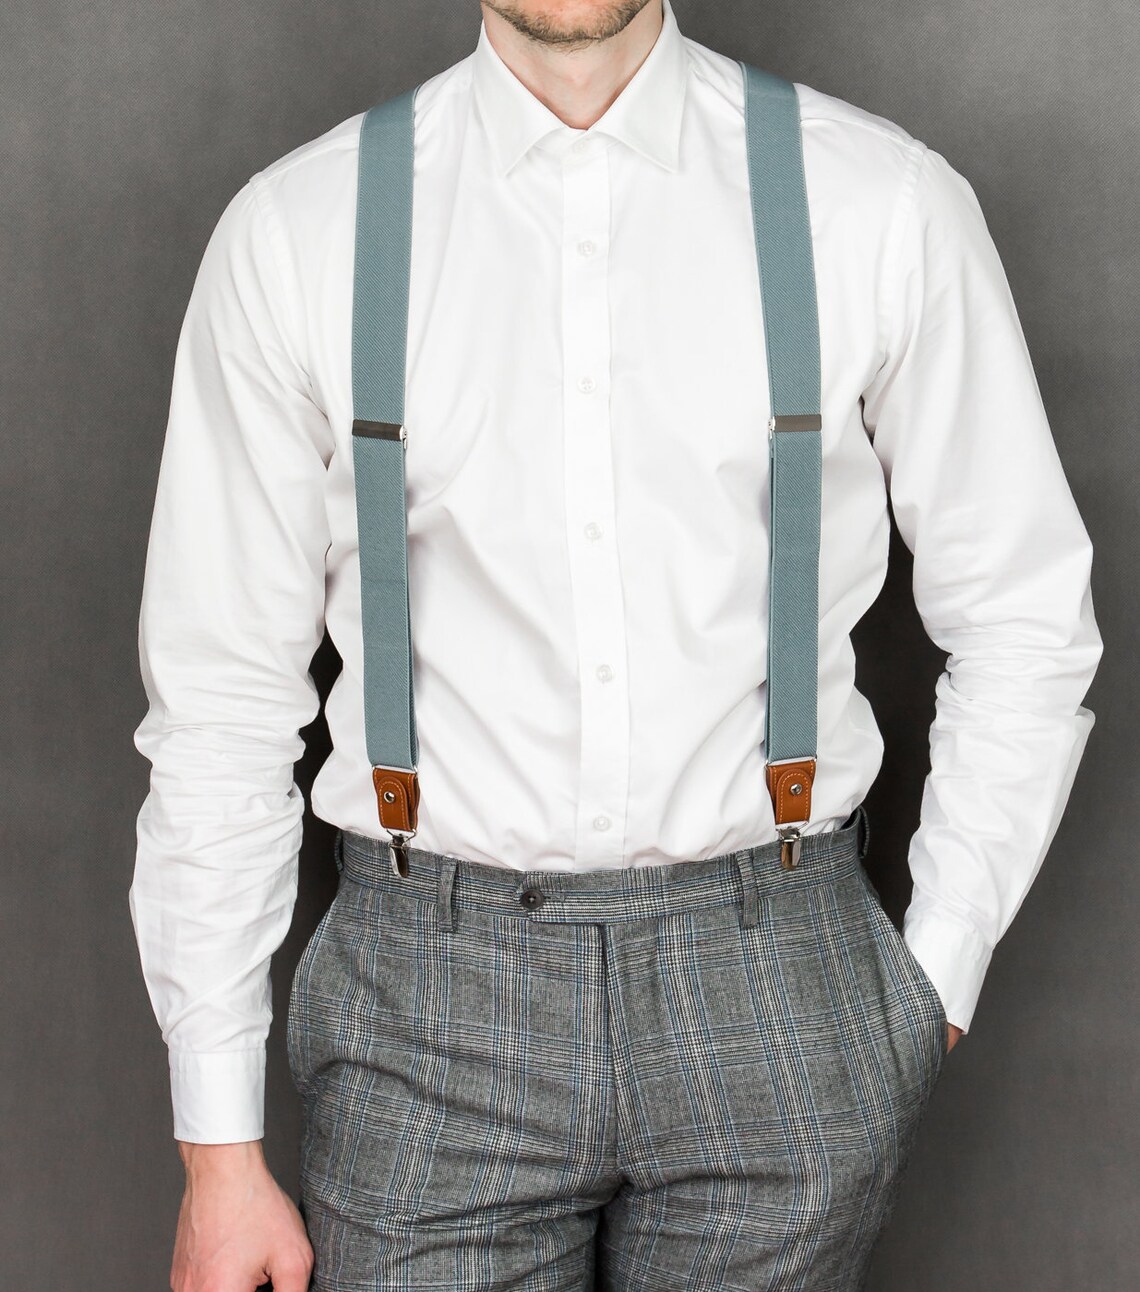 Blue Gray suspenders Button loop suspenders for groom | Etsy